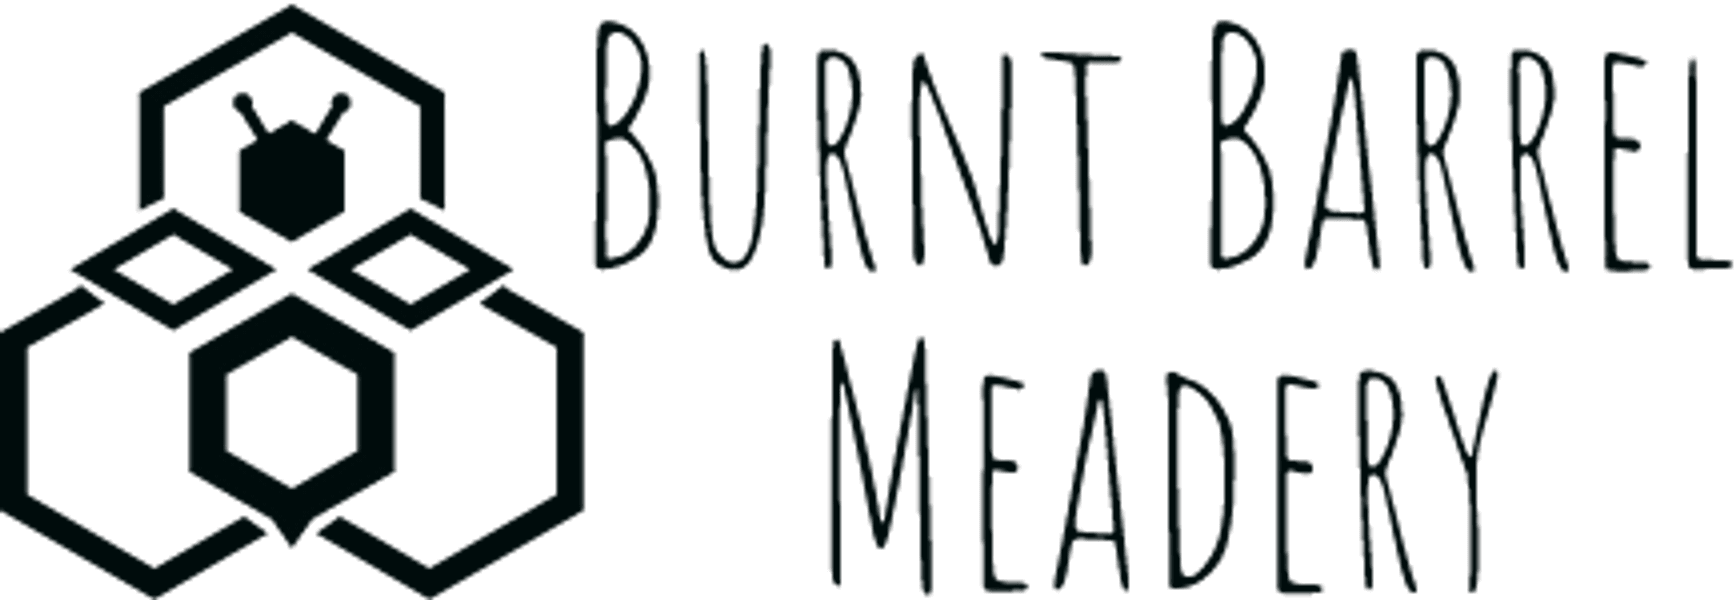 Burnt Barrel Meadery